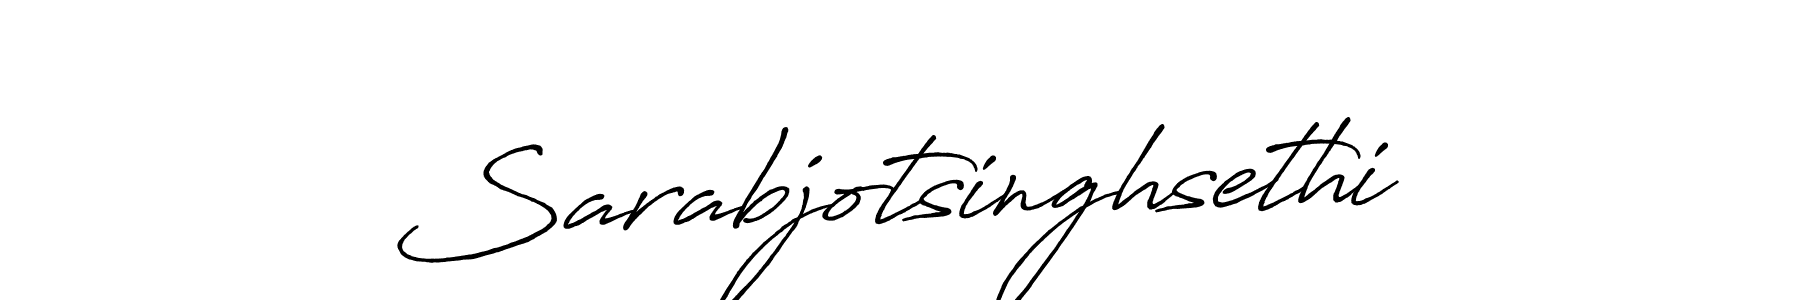 How to Draw Sarabjotsinghsethi signature style? Antro_Vectra_Bolder is a latest design signature styles for name Sarabjotsinghsethi. Sarabjotsinghsethi signature style 7 images and pictures png